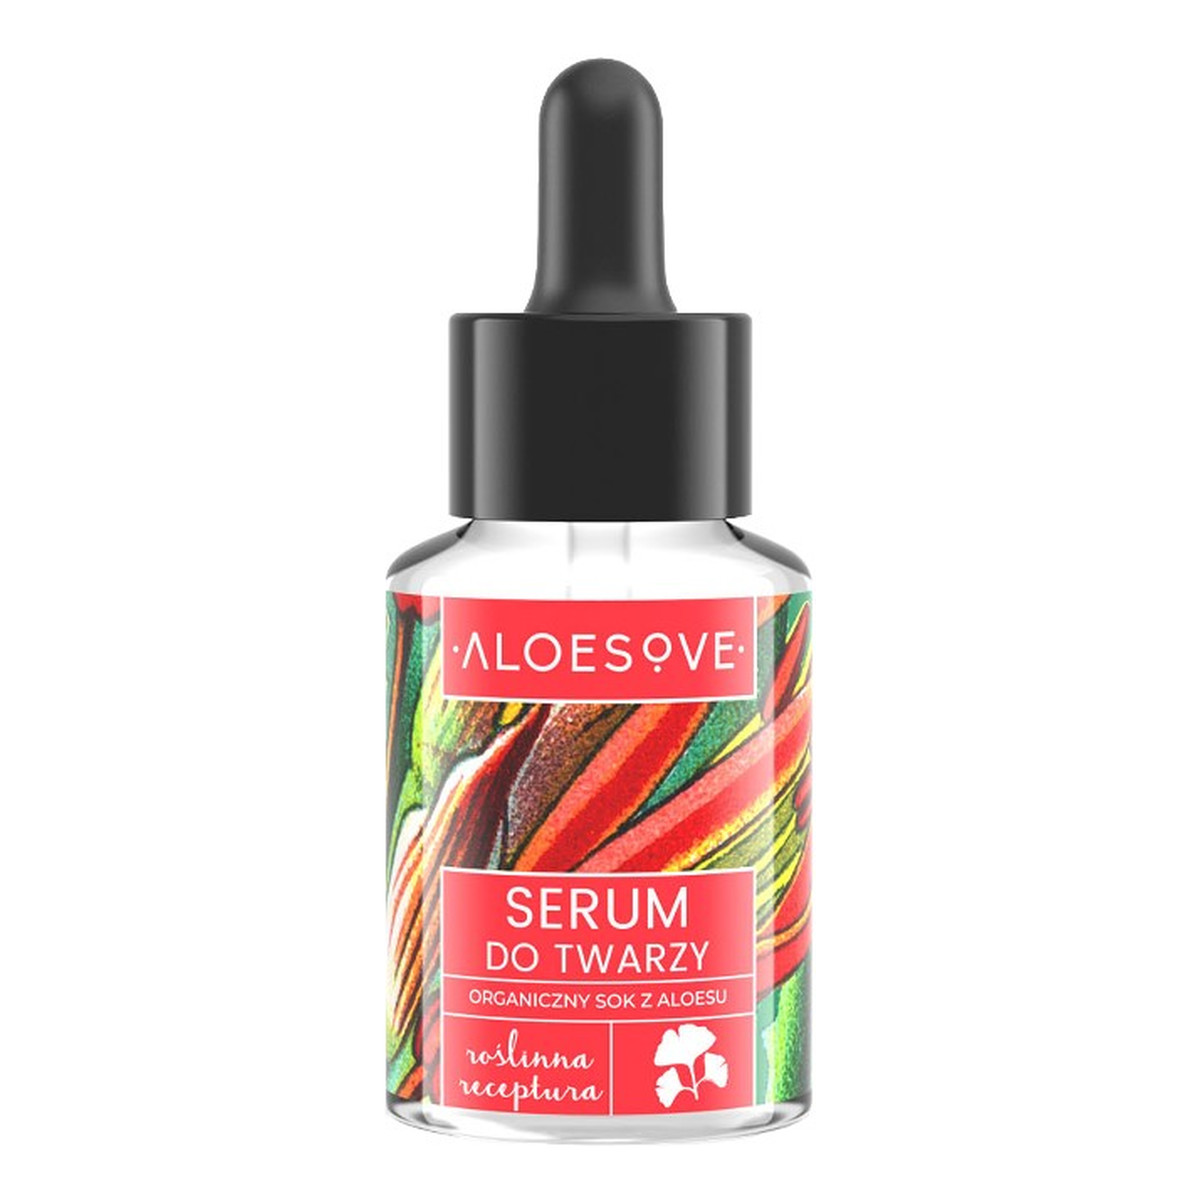 Aloesove Serum do twarzy 30ml